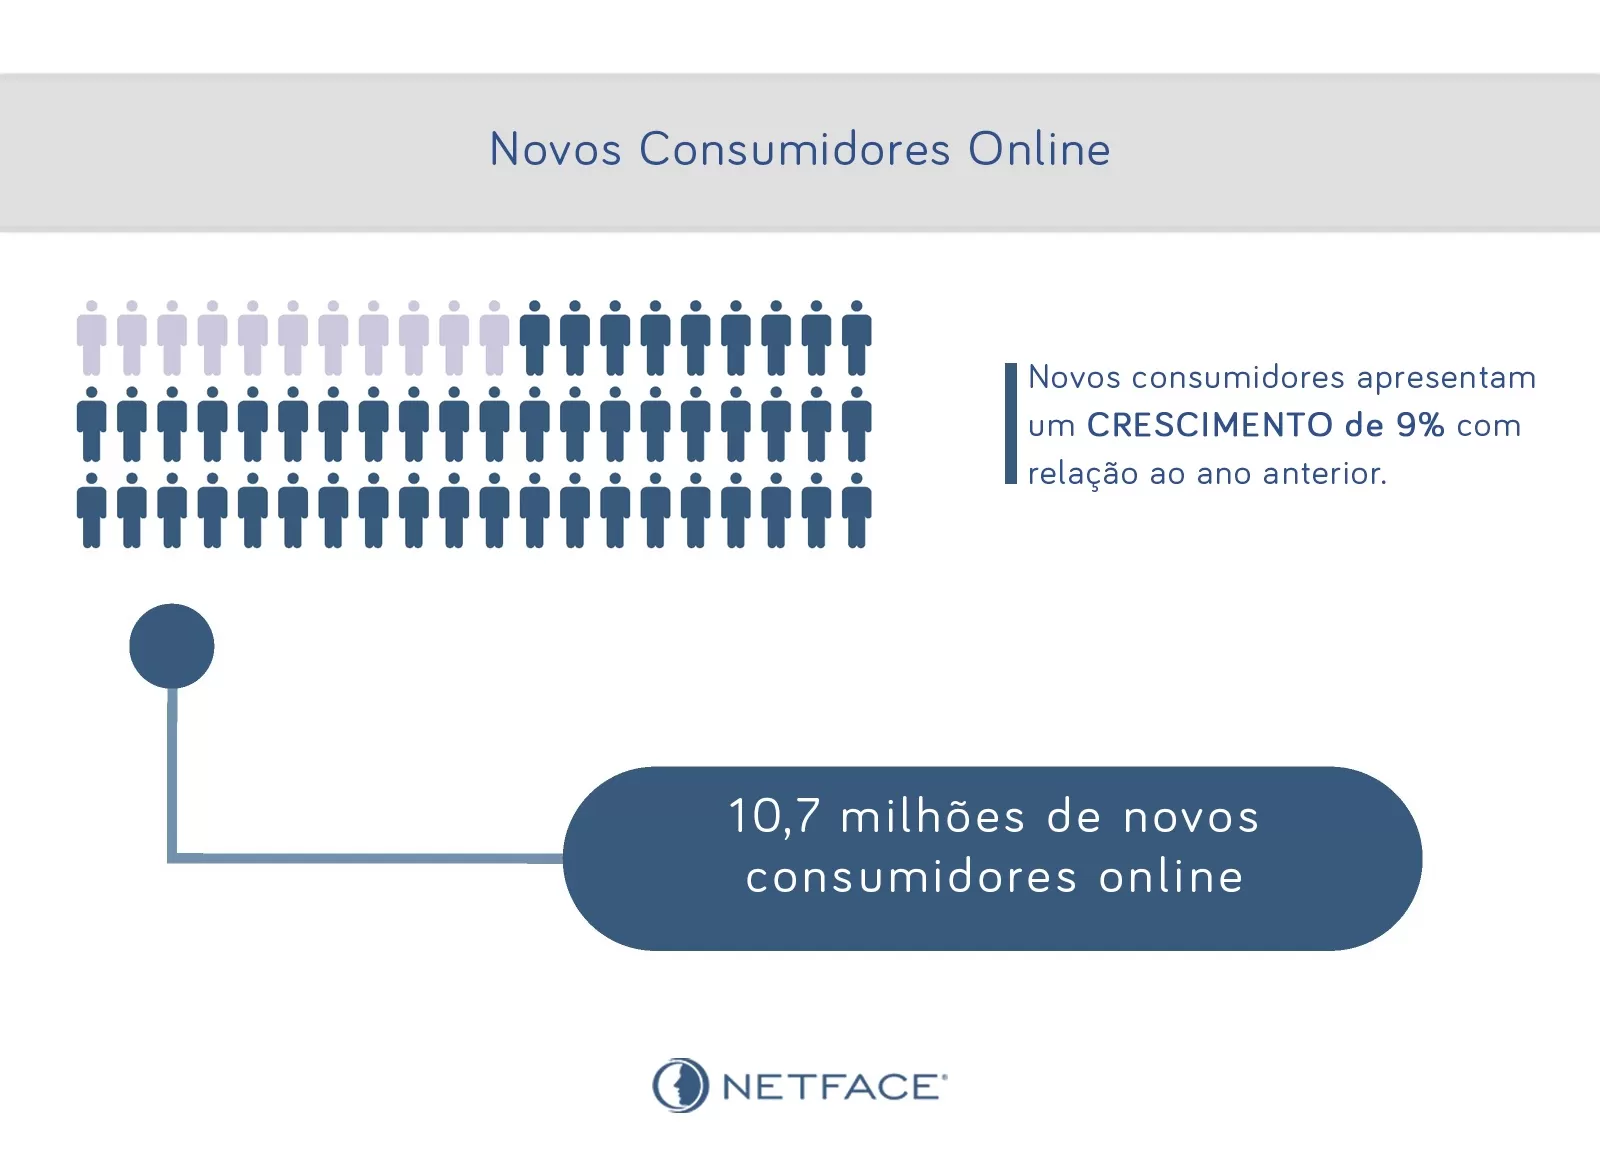 Novos consumidores online